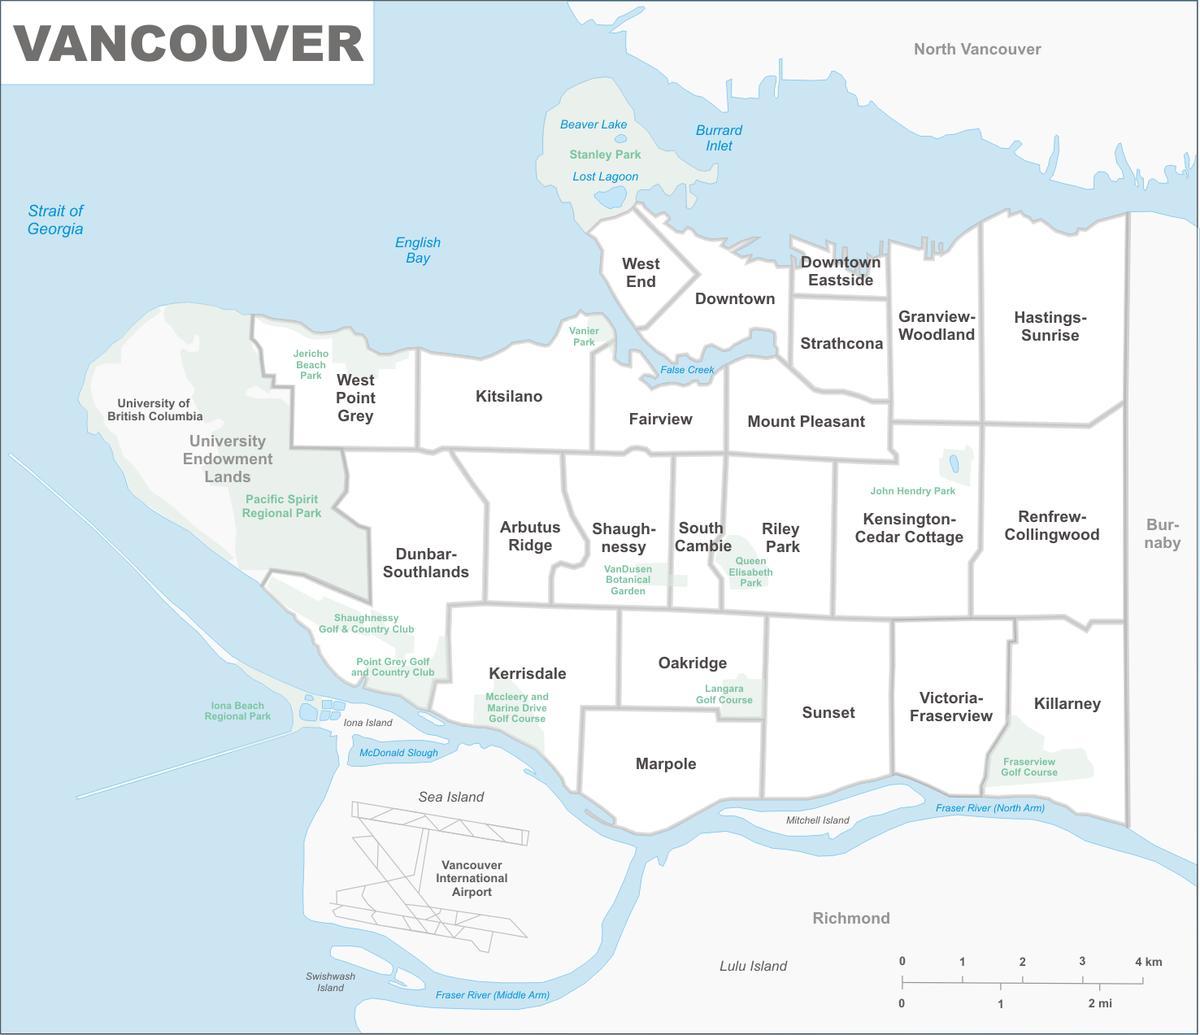 greater vancouver-området kart